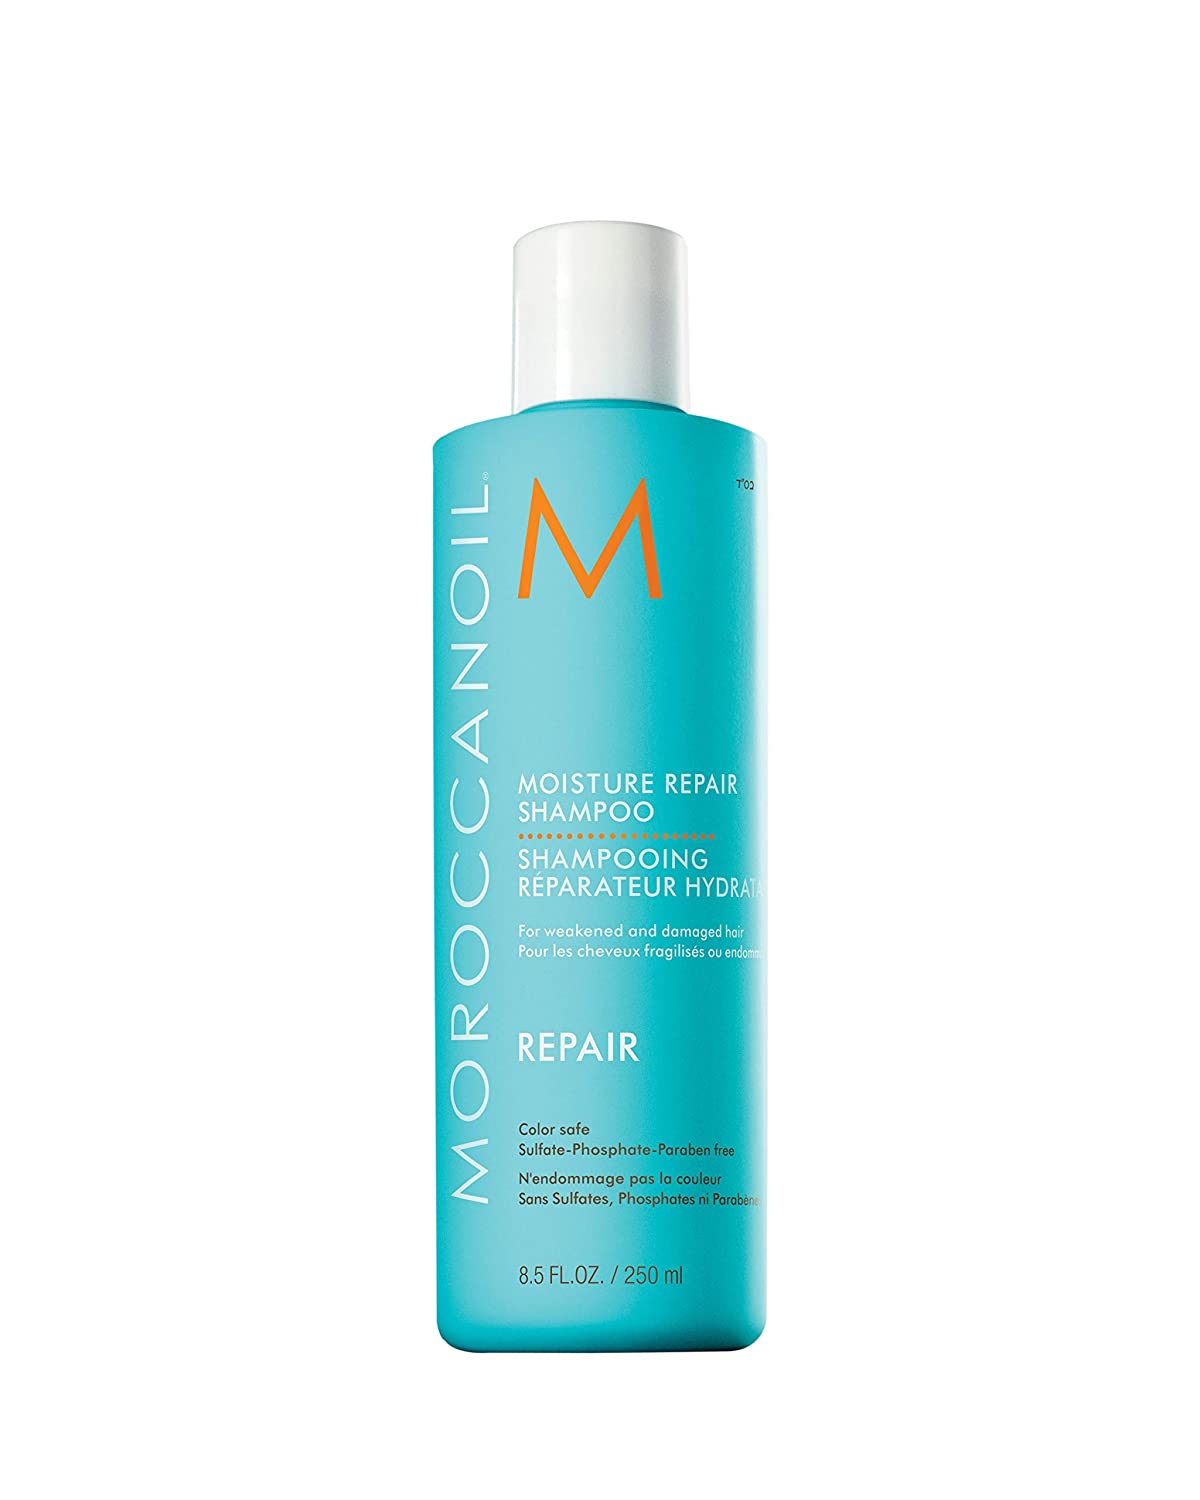 Moroccanoil - Moisture Repair Shampoo - 8.5 oz / 250 ml - by Moroccanoil |ProCare Outlet|